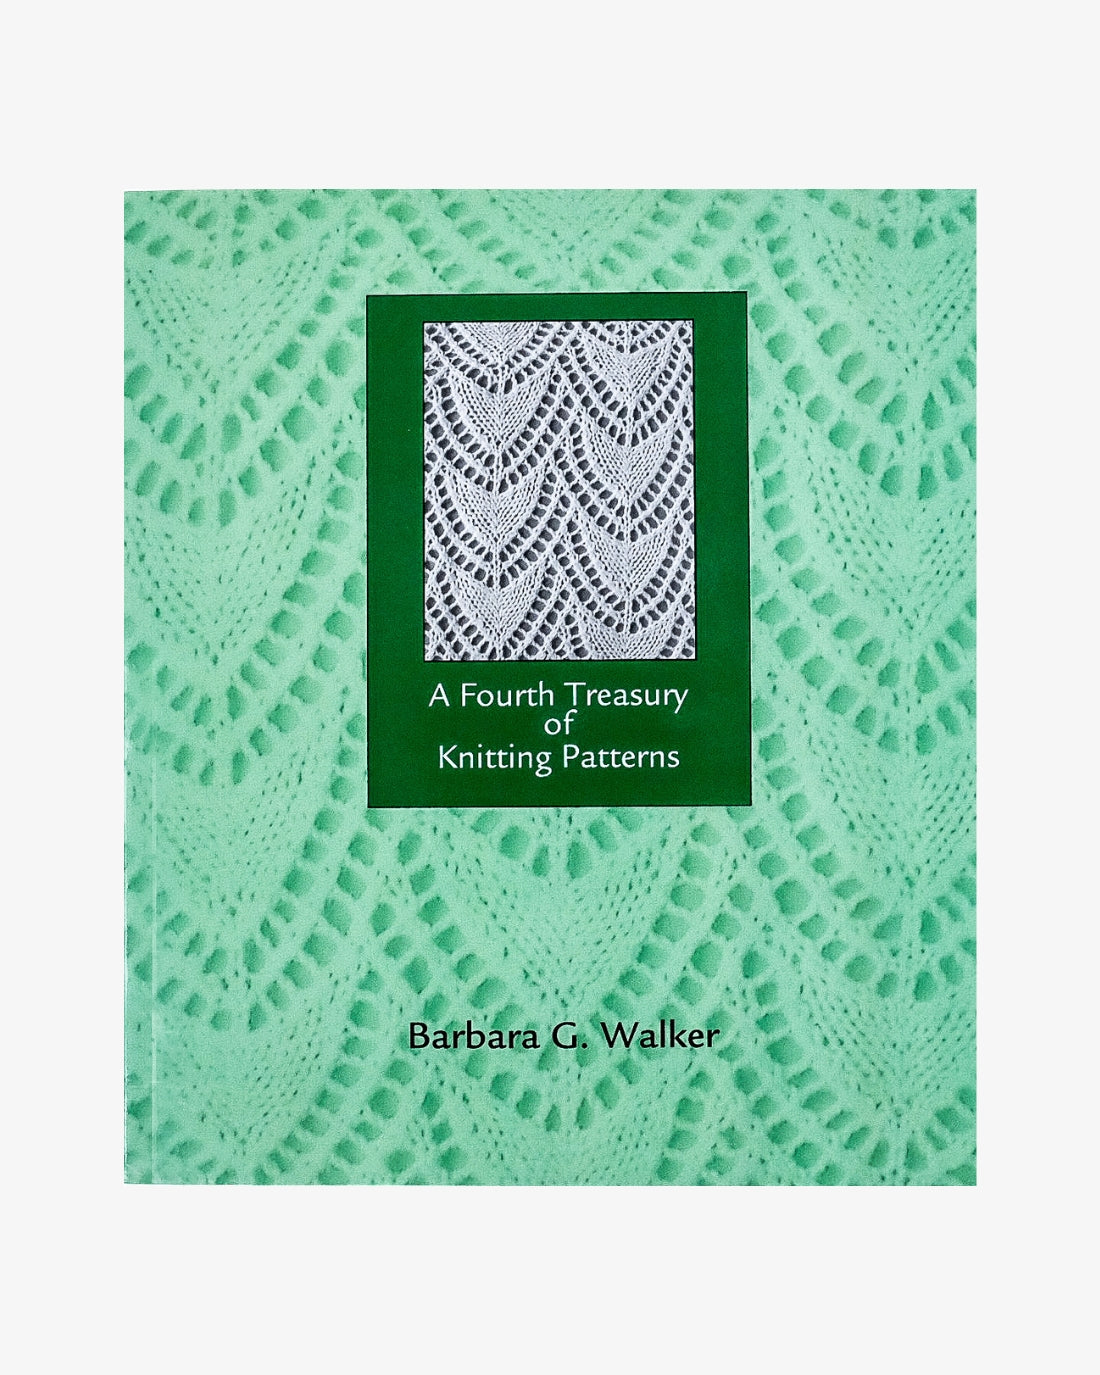 A Fourth Treasury of Knitting Patterns by Barbara G. Walker